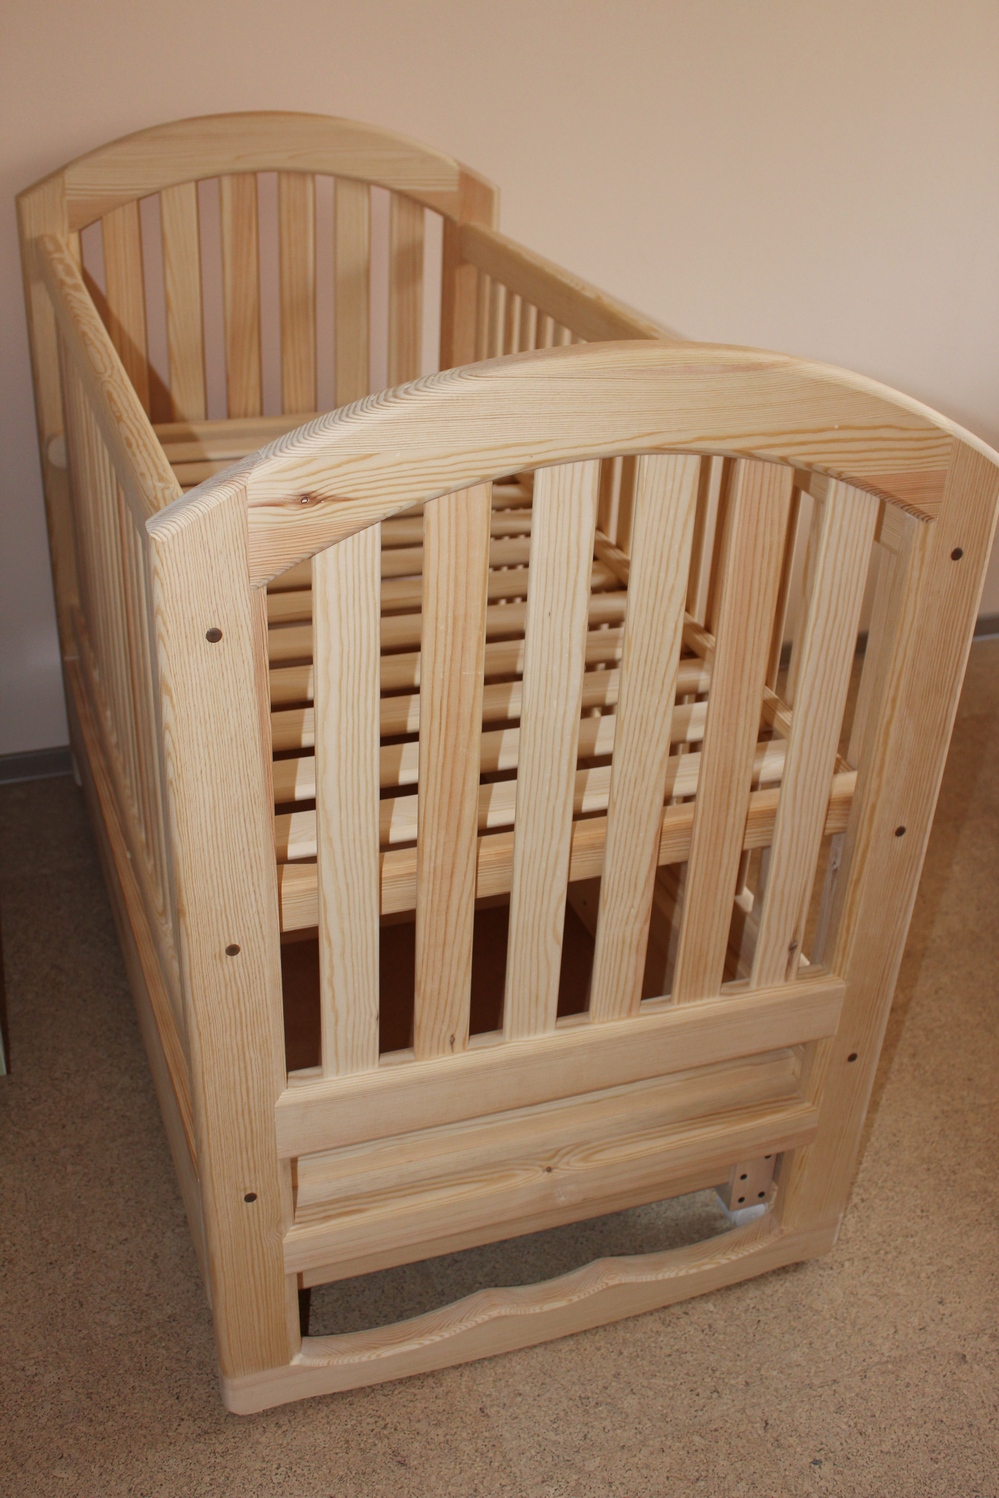 Wooden crib for a newborn baby